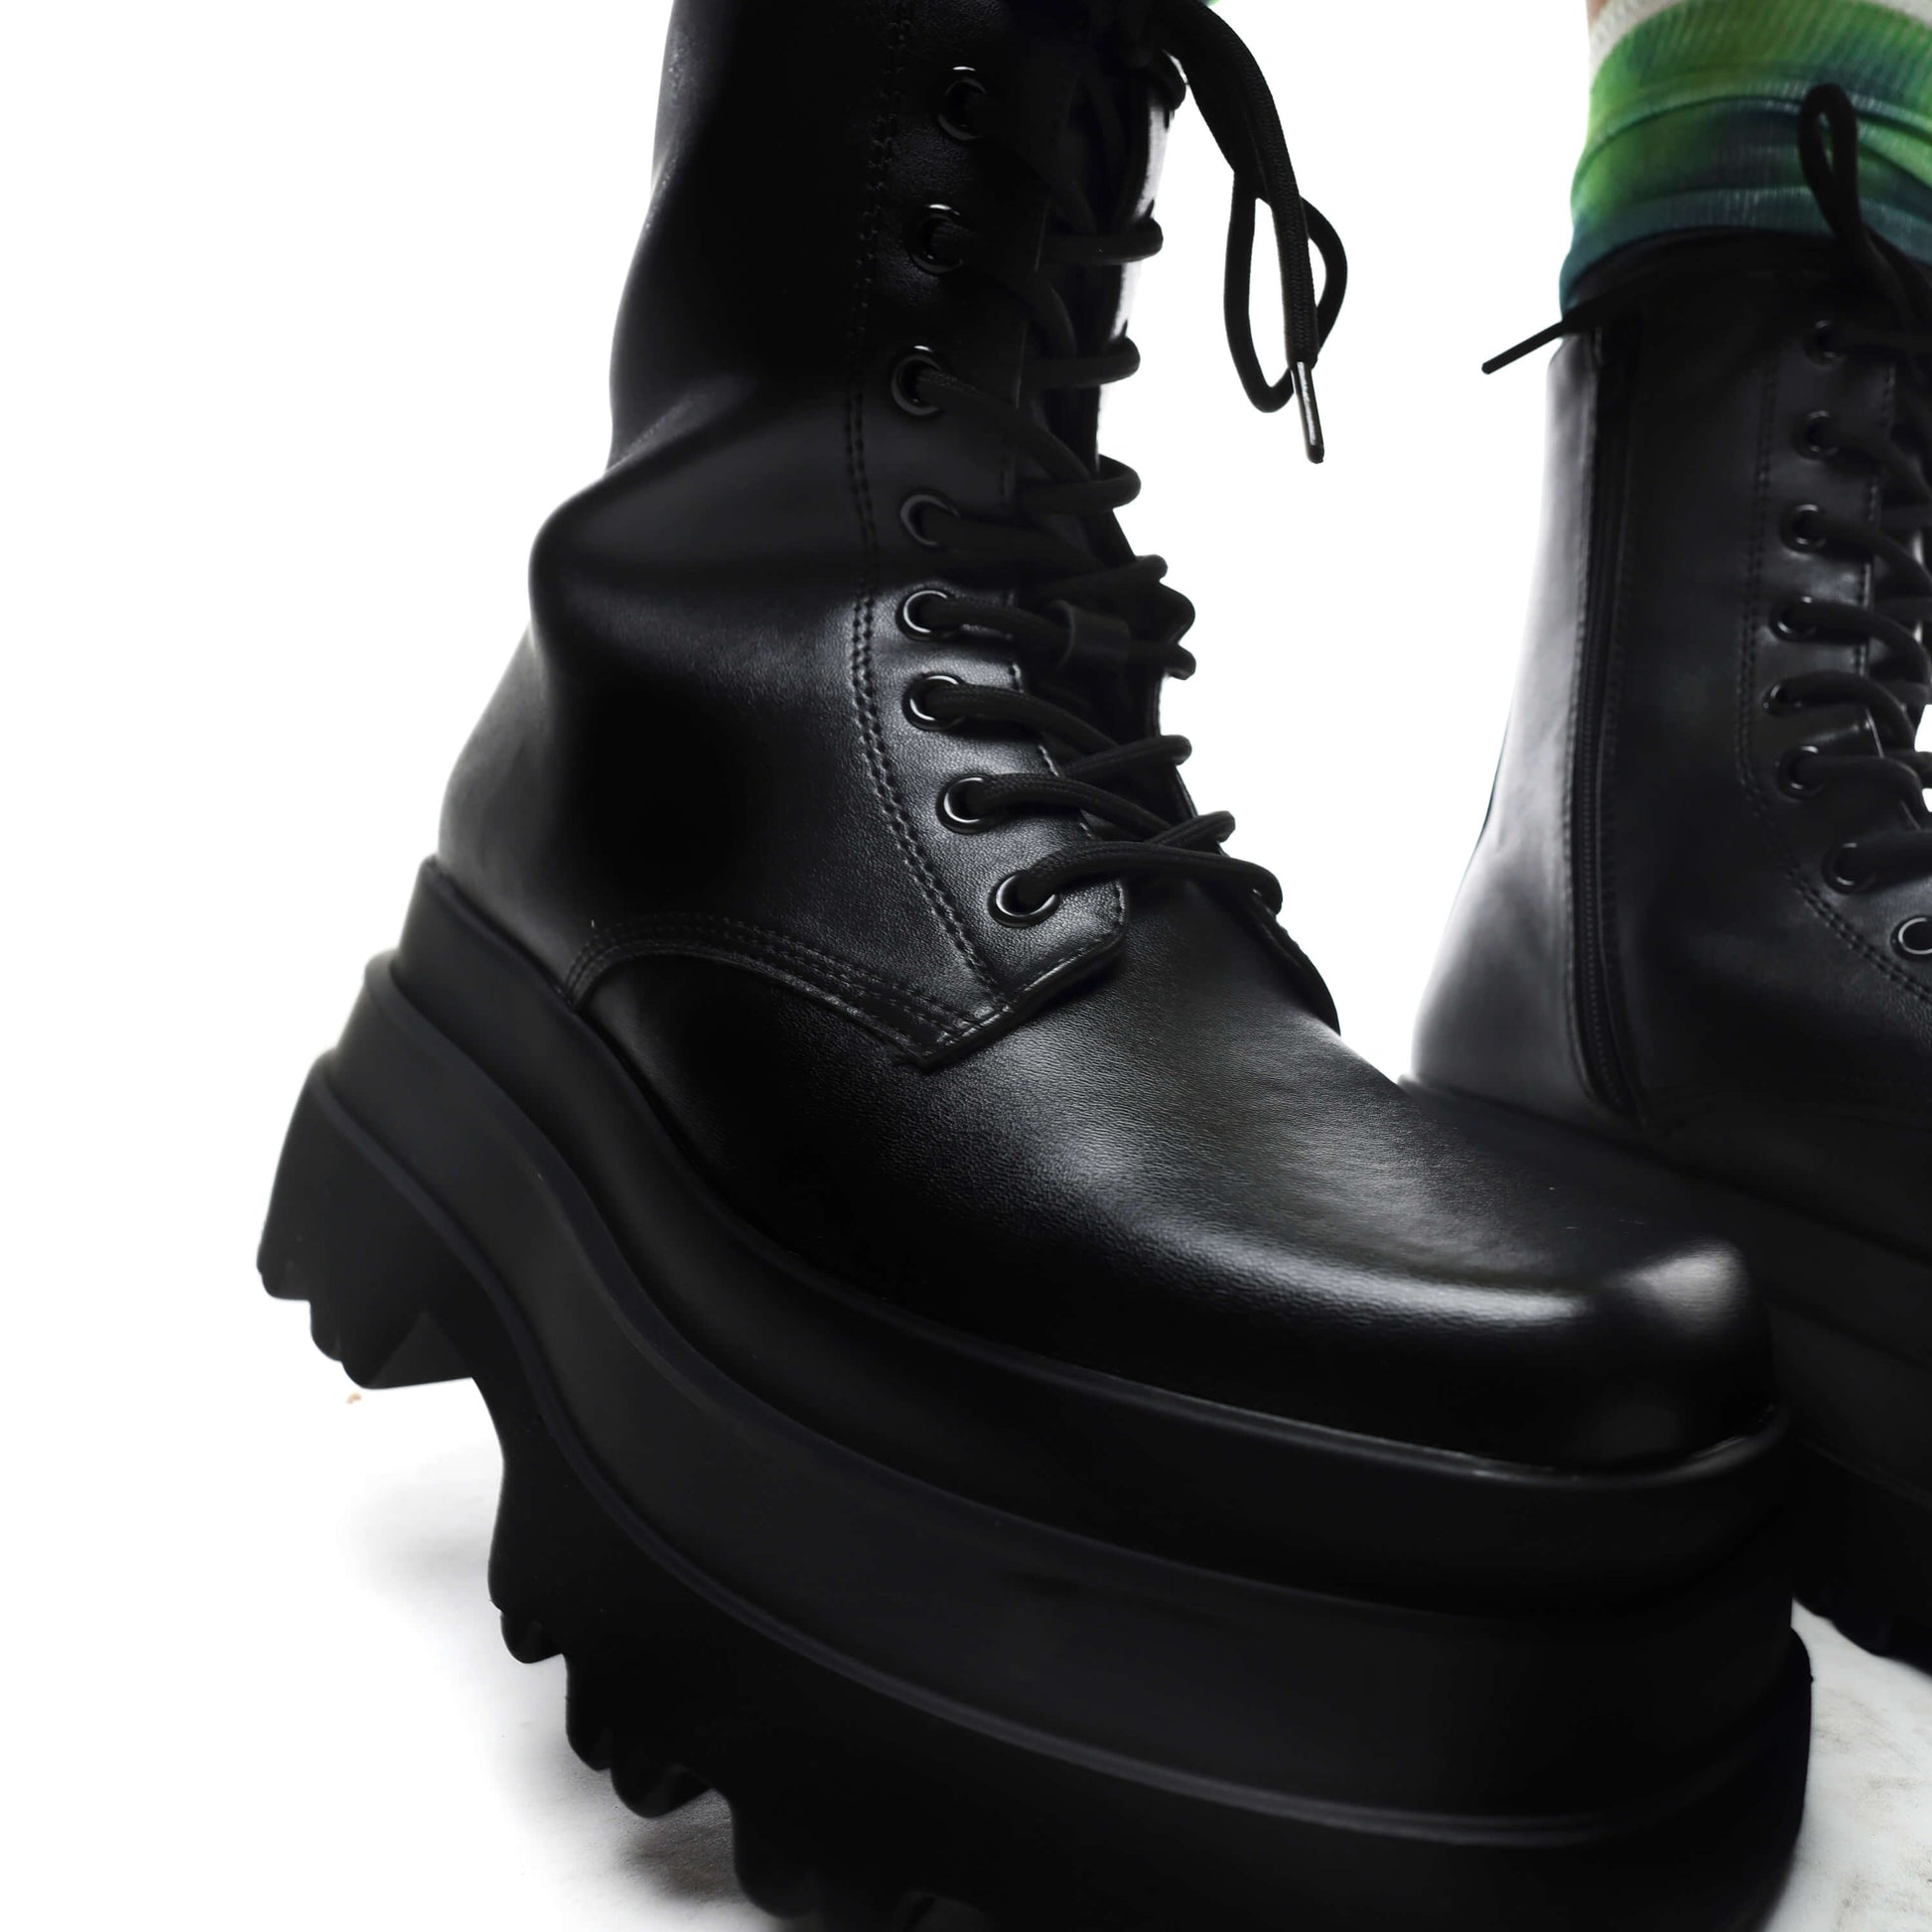 Deathwatch Trident Platform Boots - Ankle Boots - KOI Footwear - Black - Front Detail